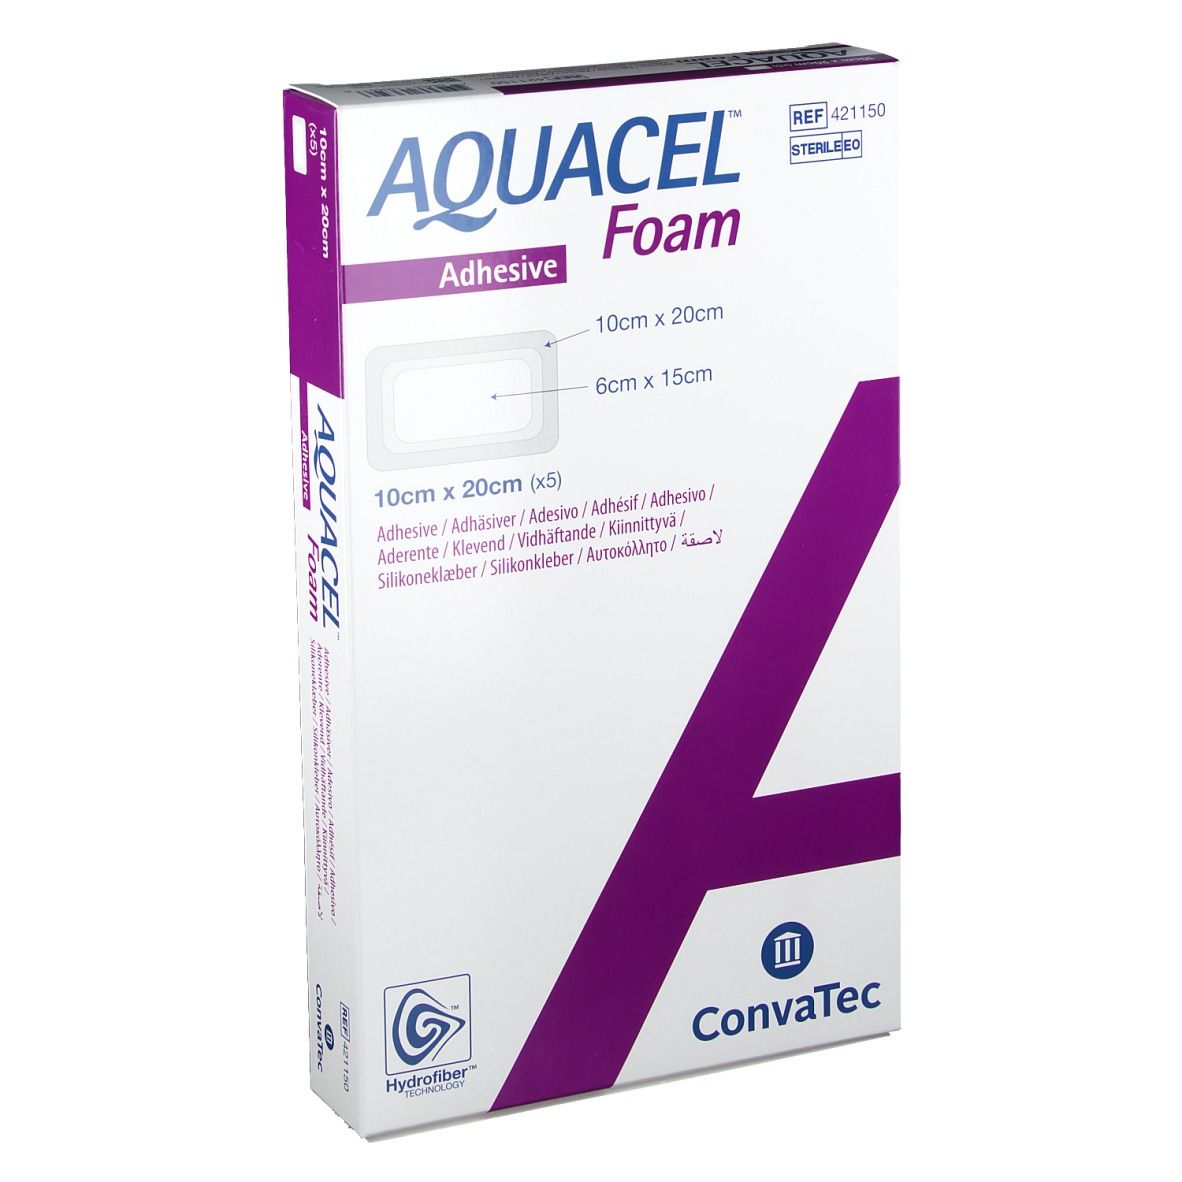 Aquacel® Foam adhäsiv 10cm x 20cm